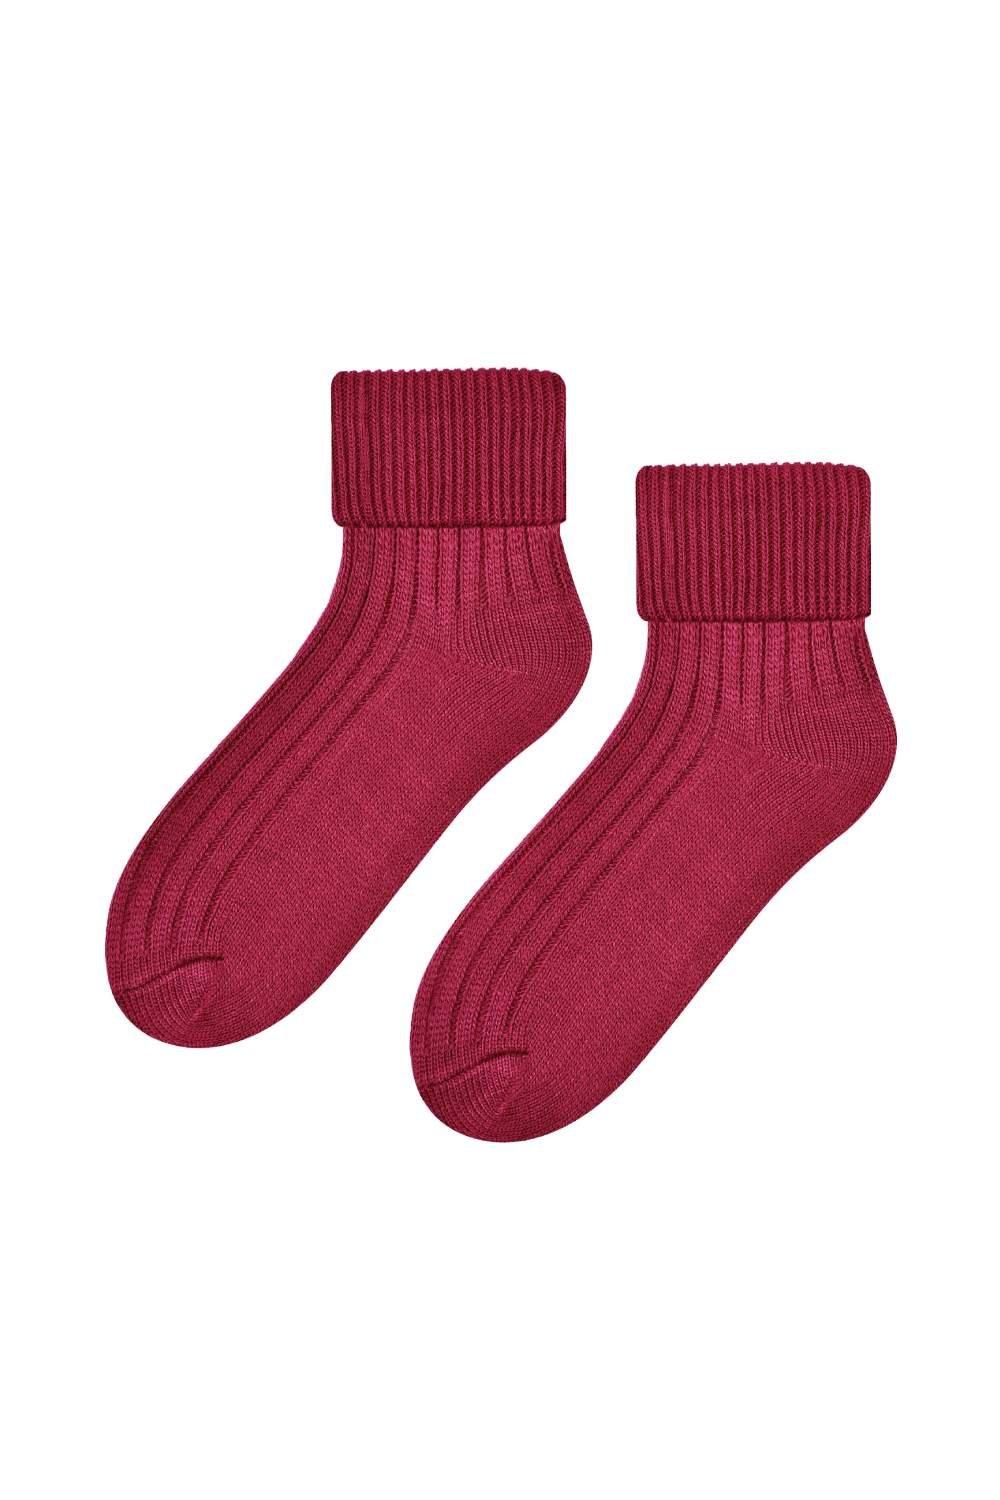 Wool Bed Socks Luxurious Super Soft Cosy Lounge Sleep Socks